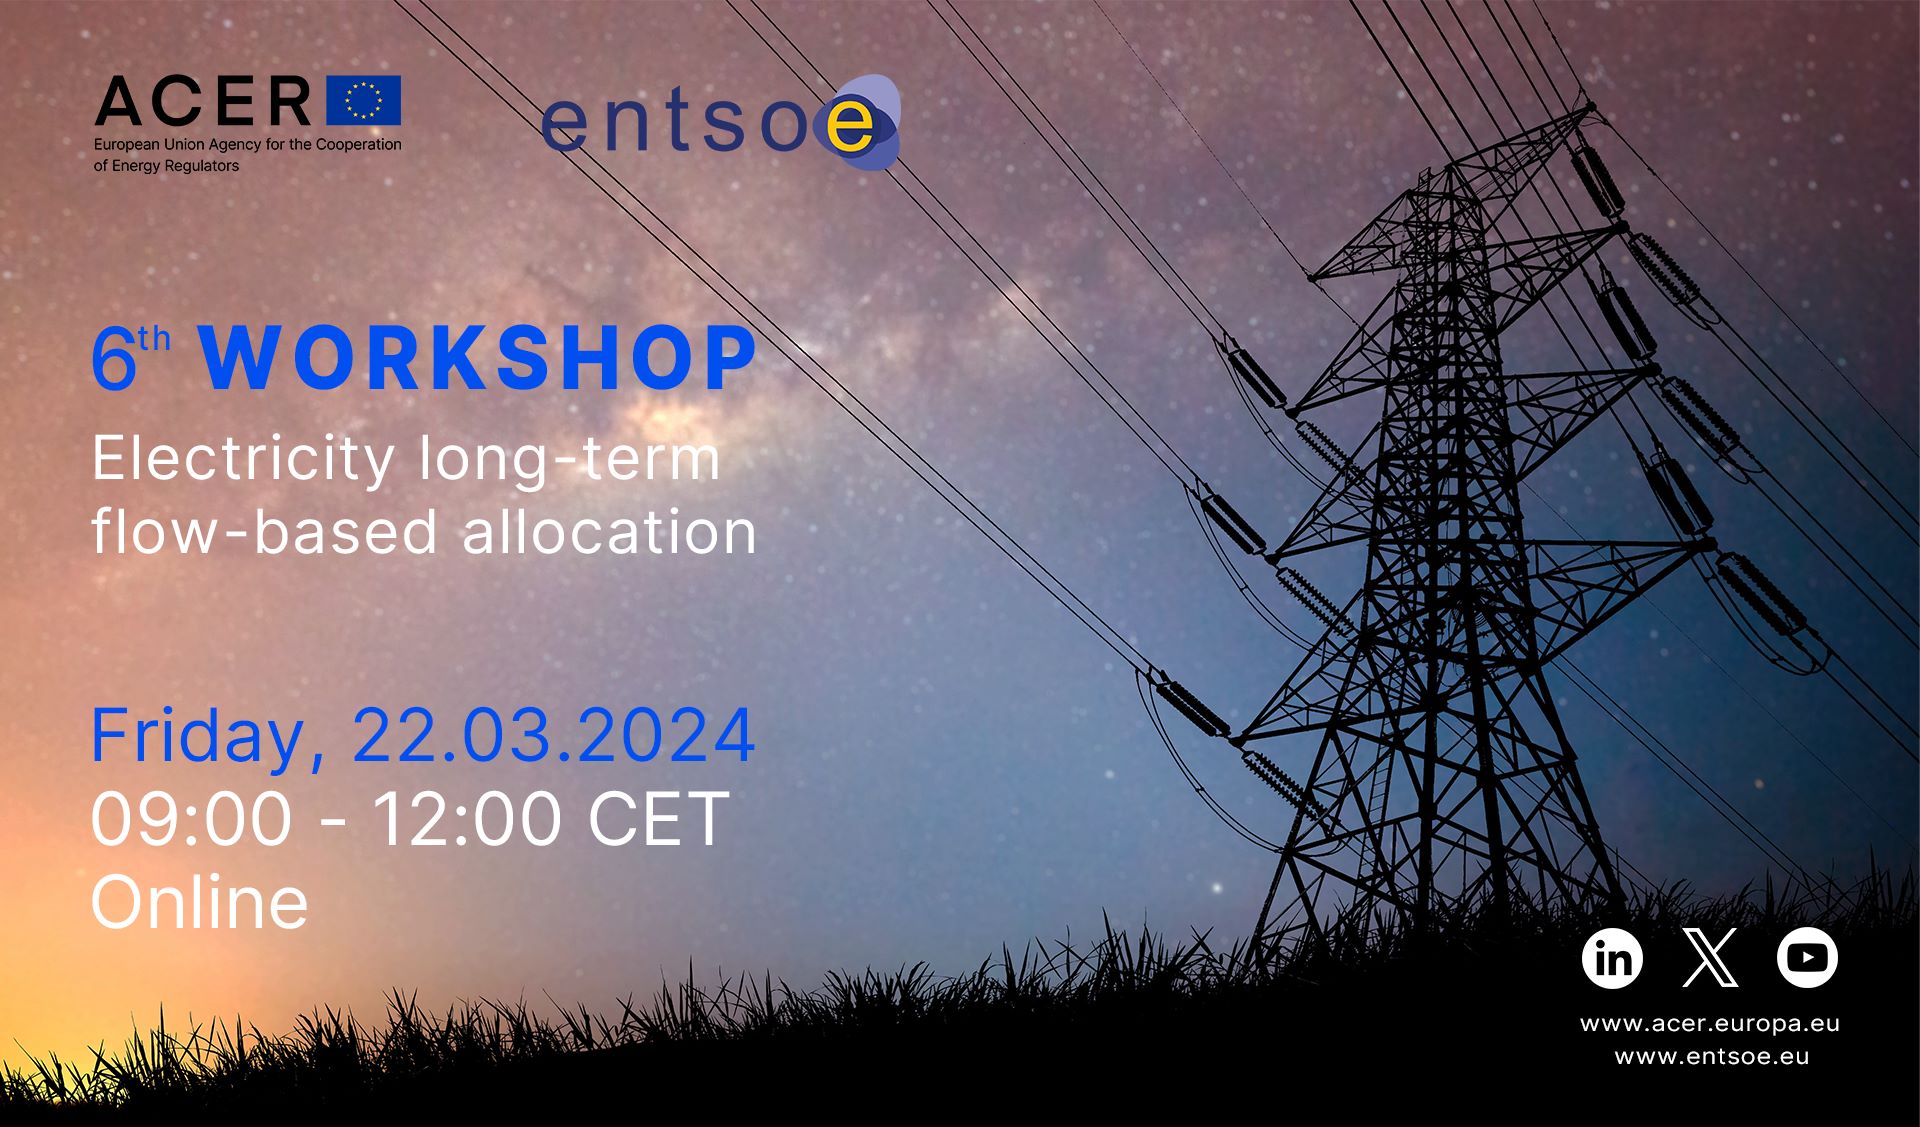 ACER-ENTSO-E workshop on electricity long-term flow-based allocation